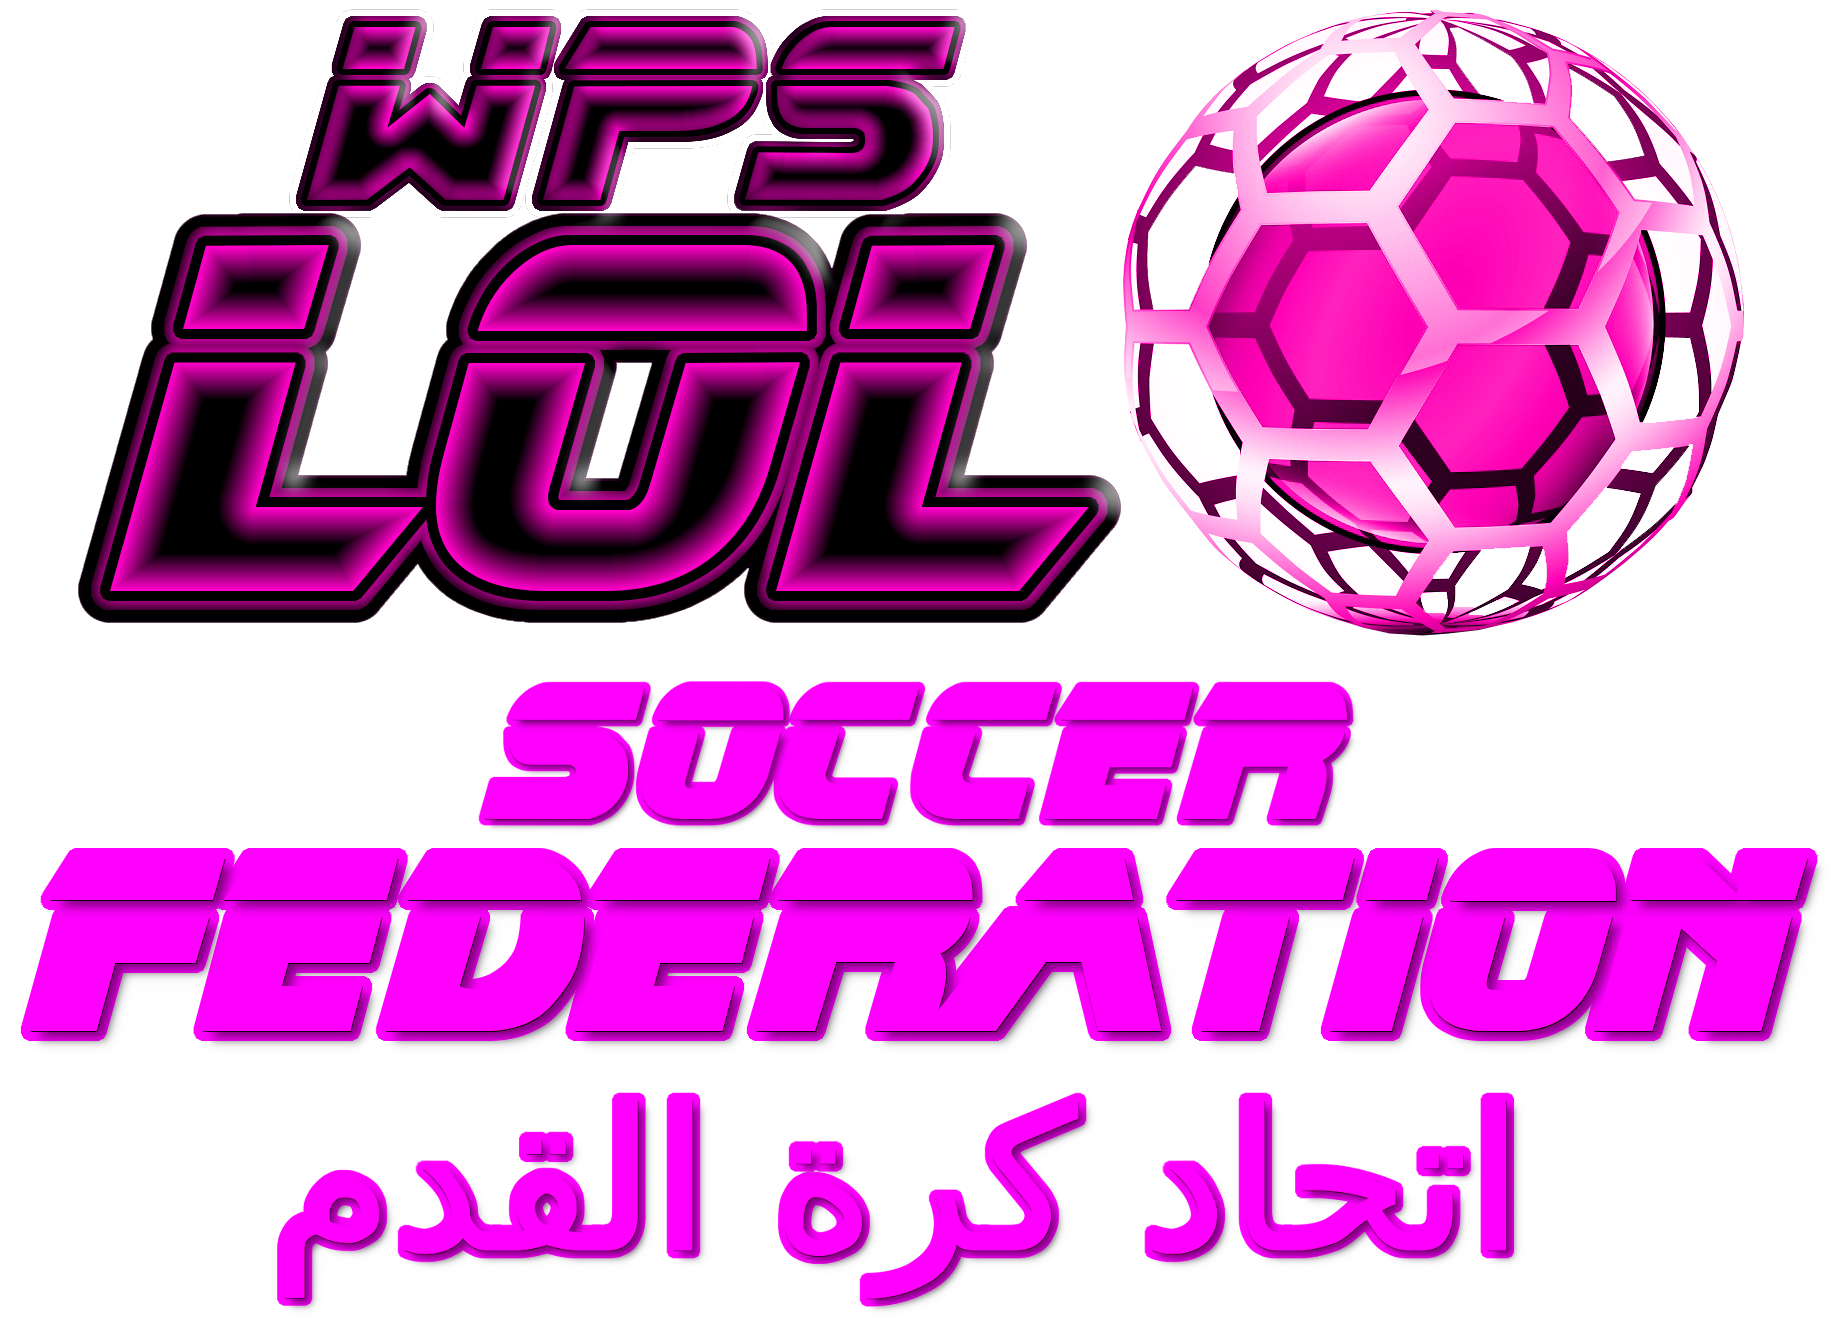 wpslolsoccerfederation logo